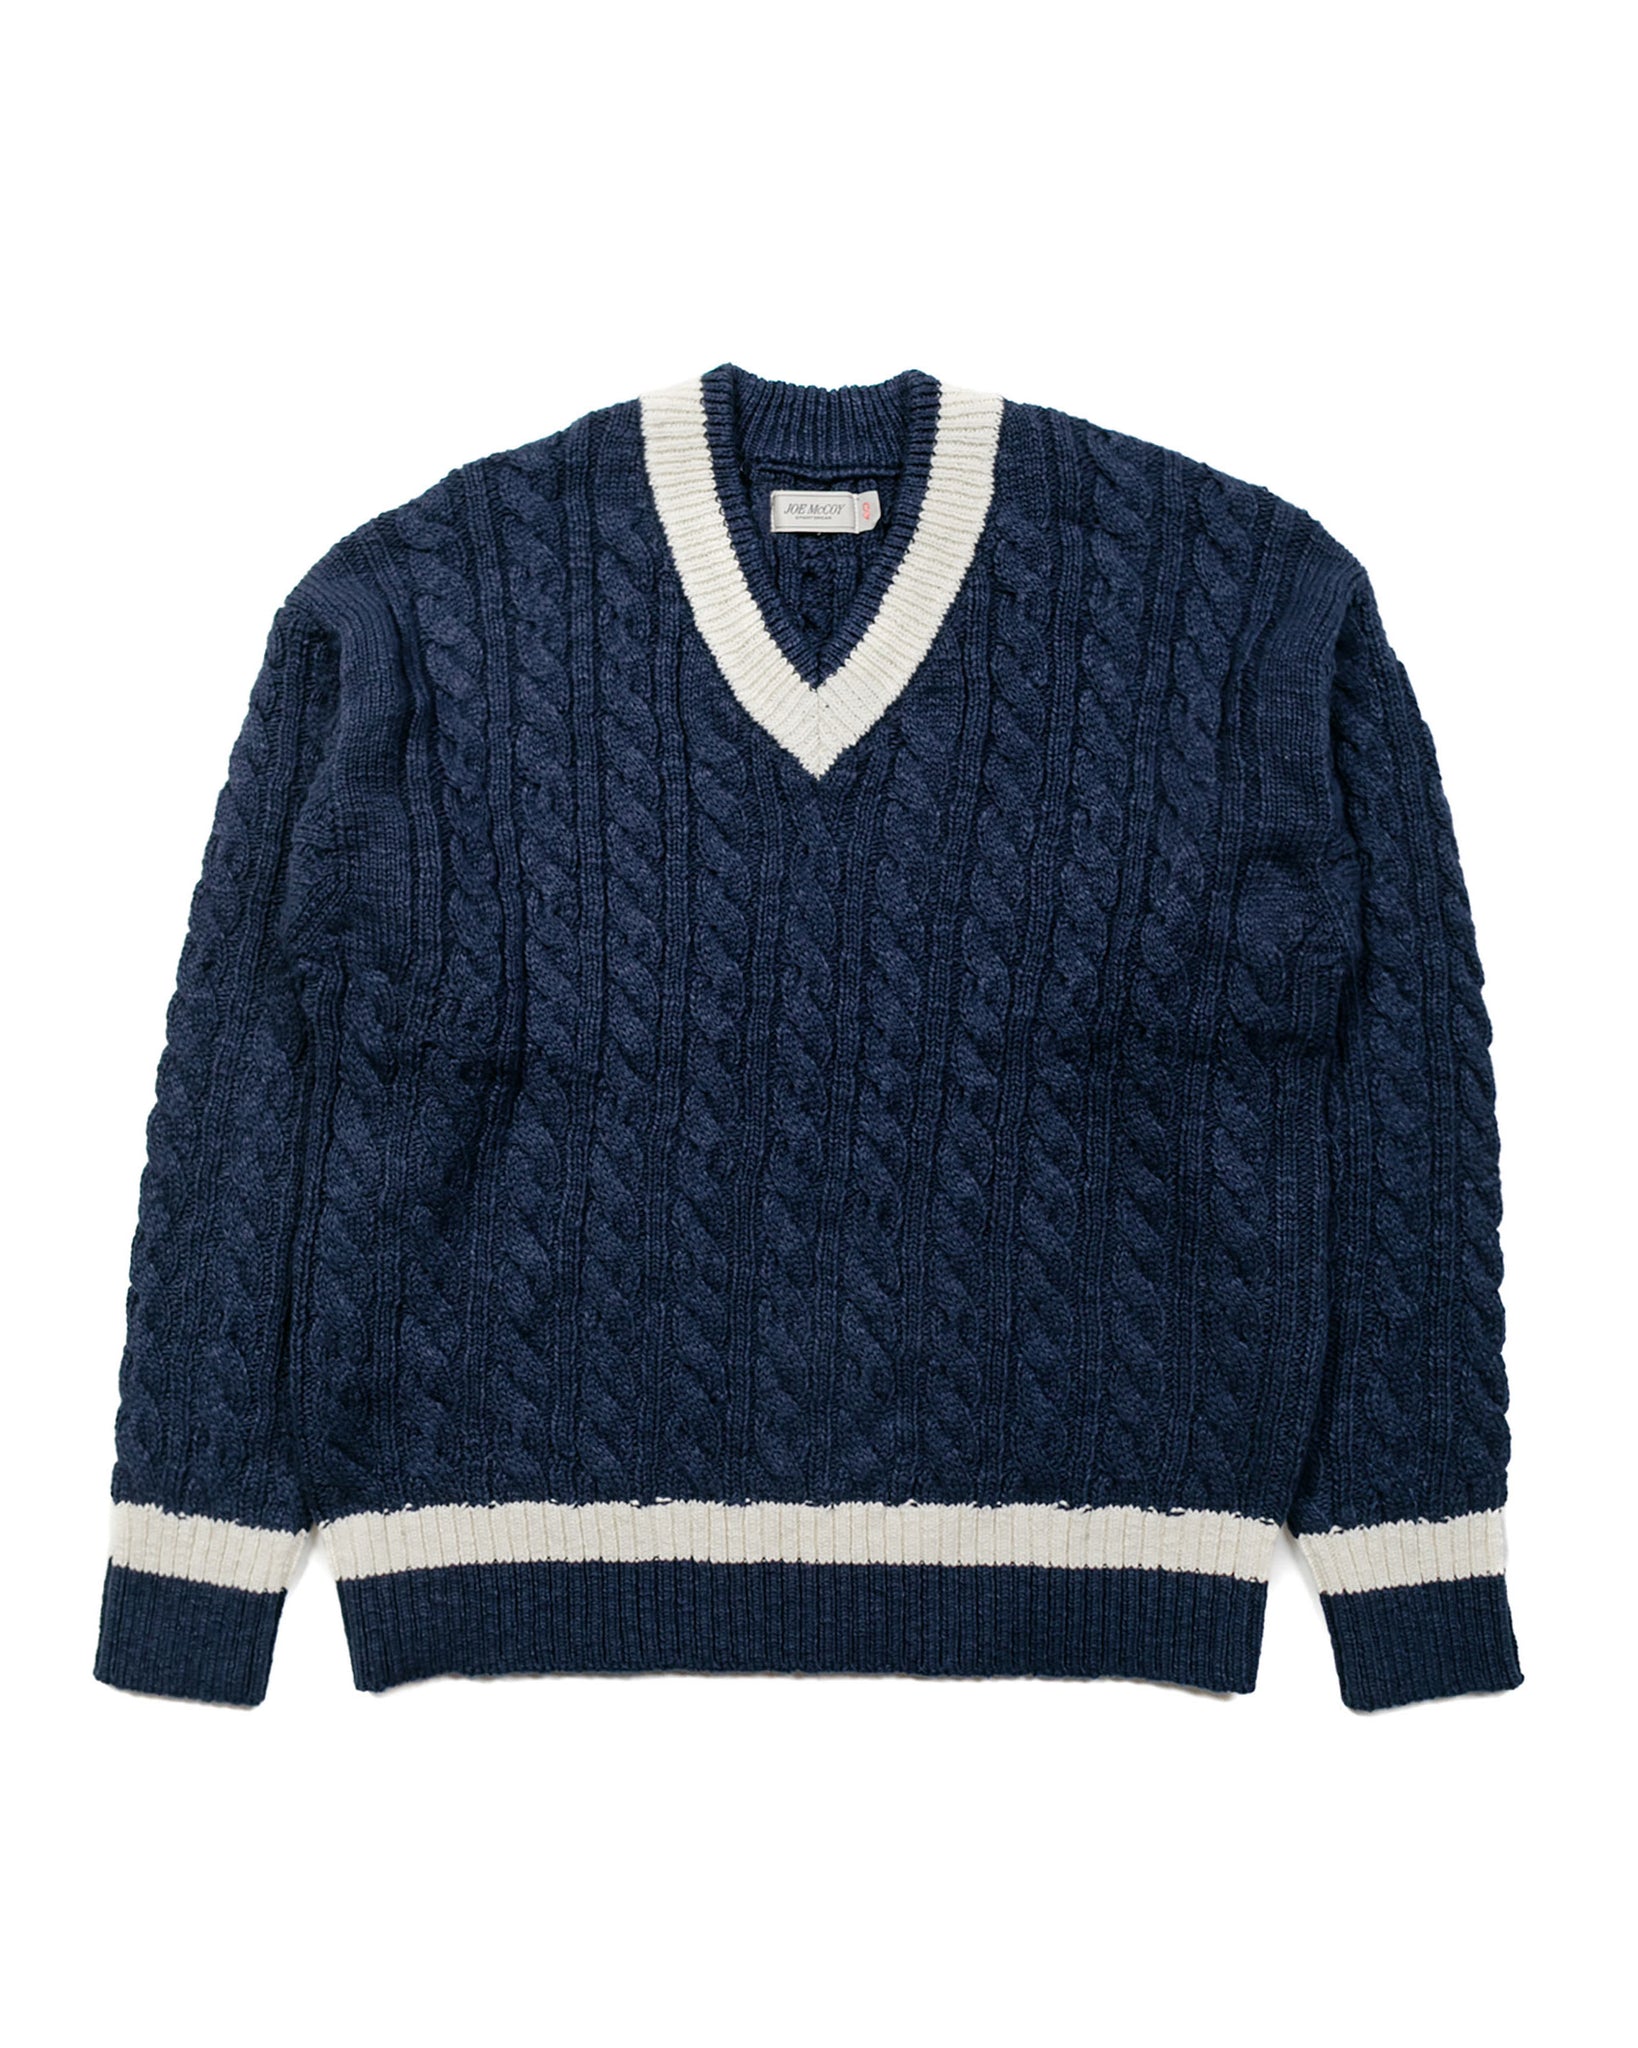 The Real McCoy's MC23108 Tilden Knit Sweater Navy